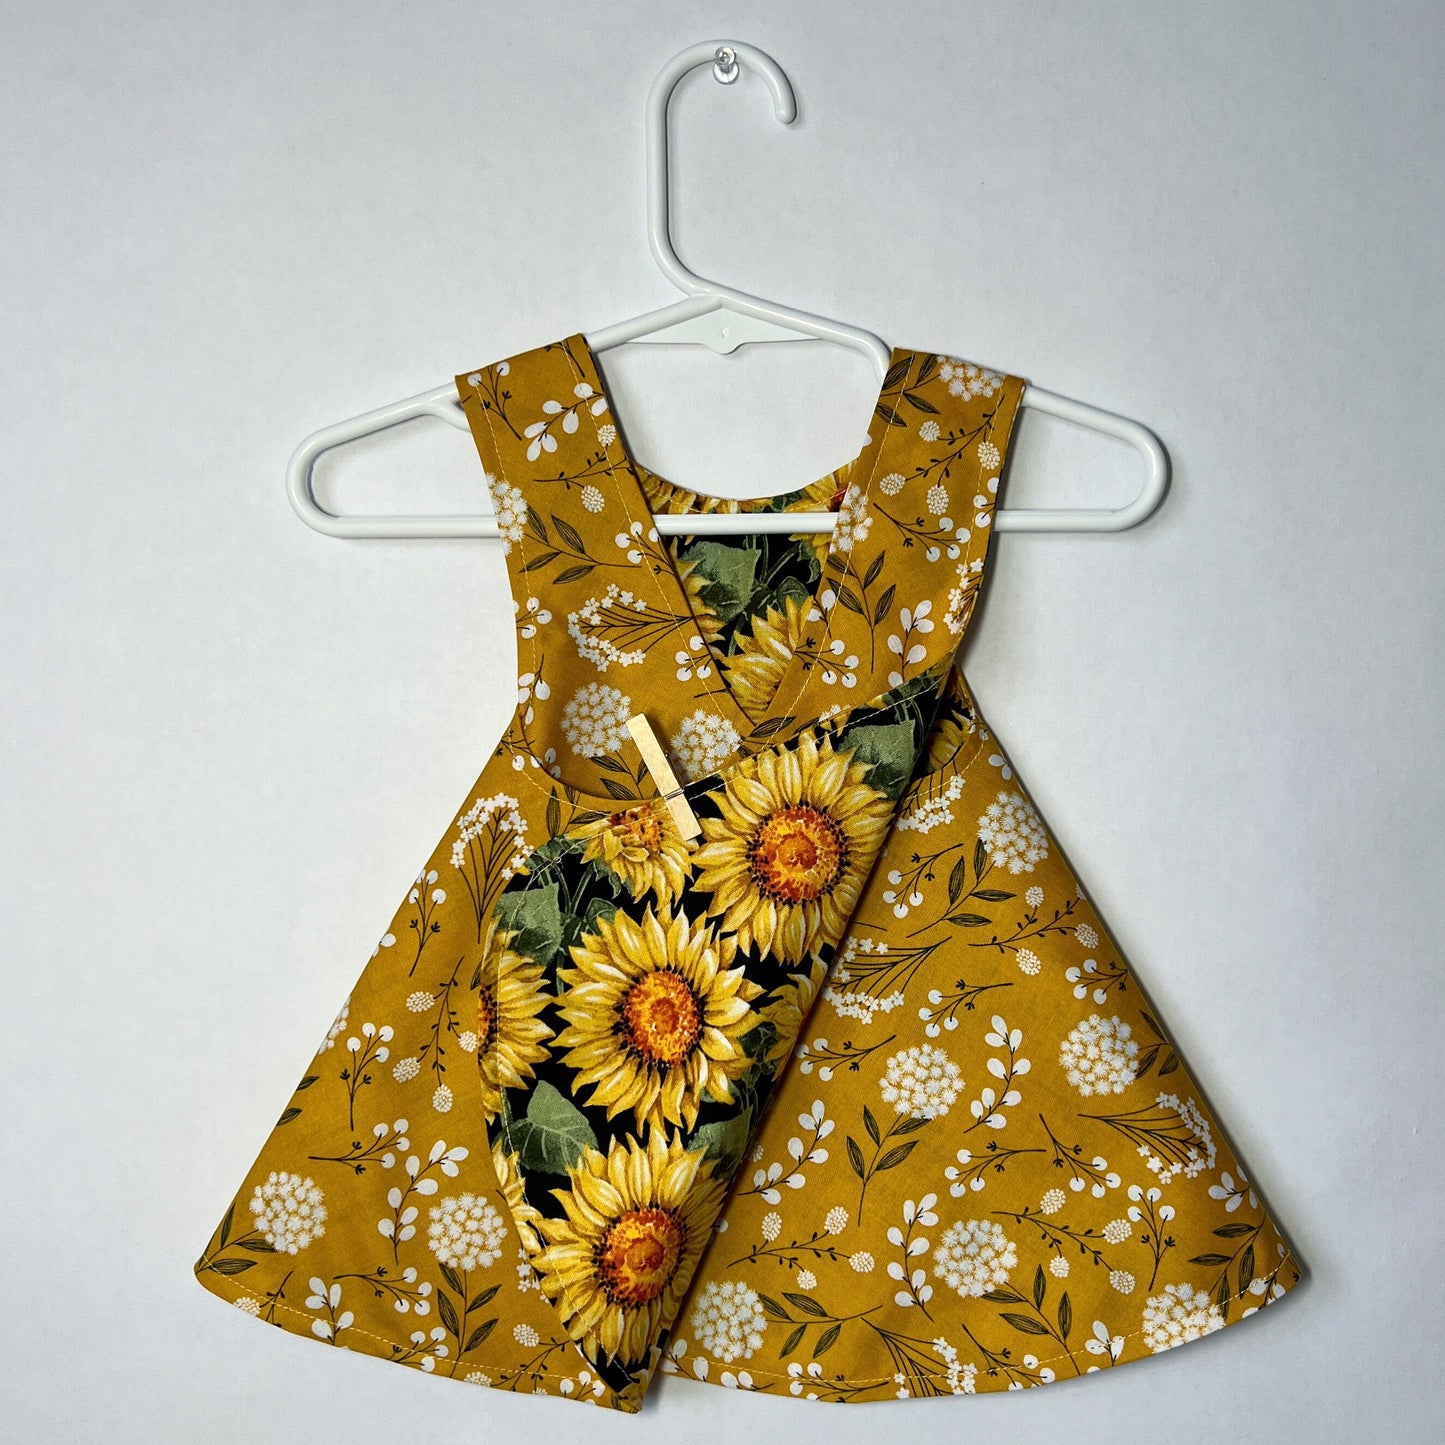 Reversible cotton dress “Sunflowers”